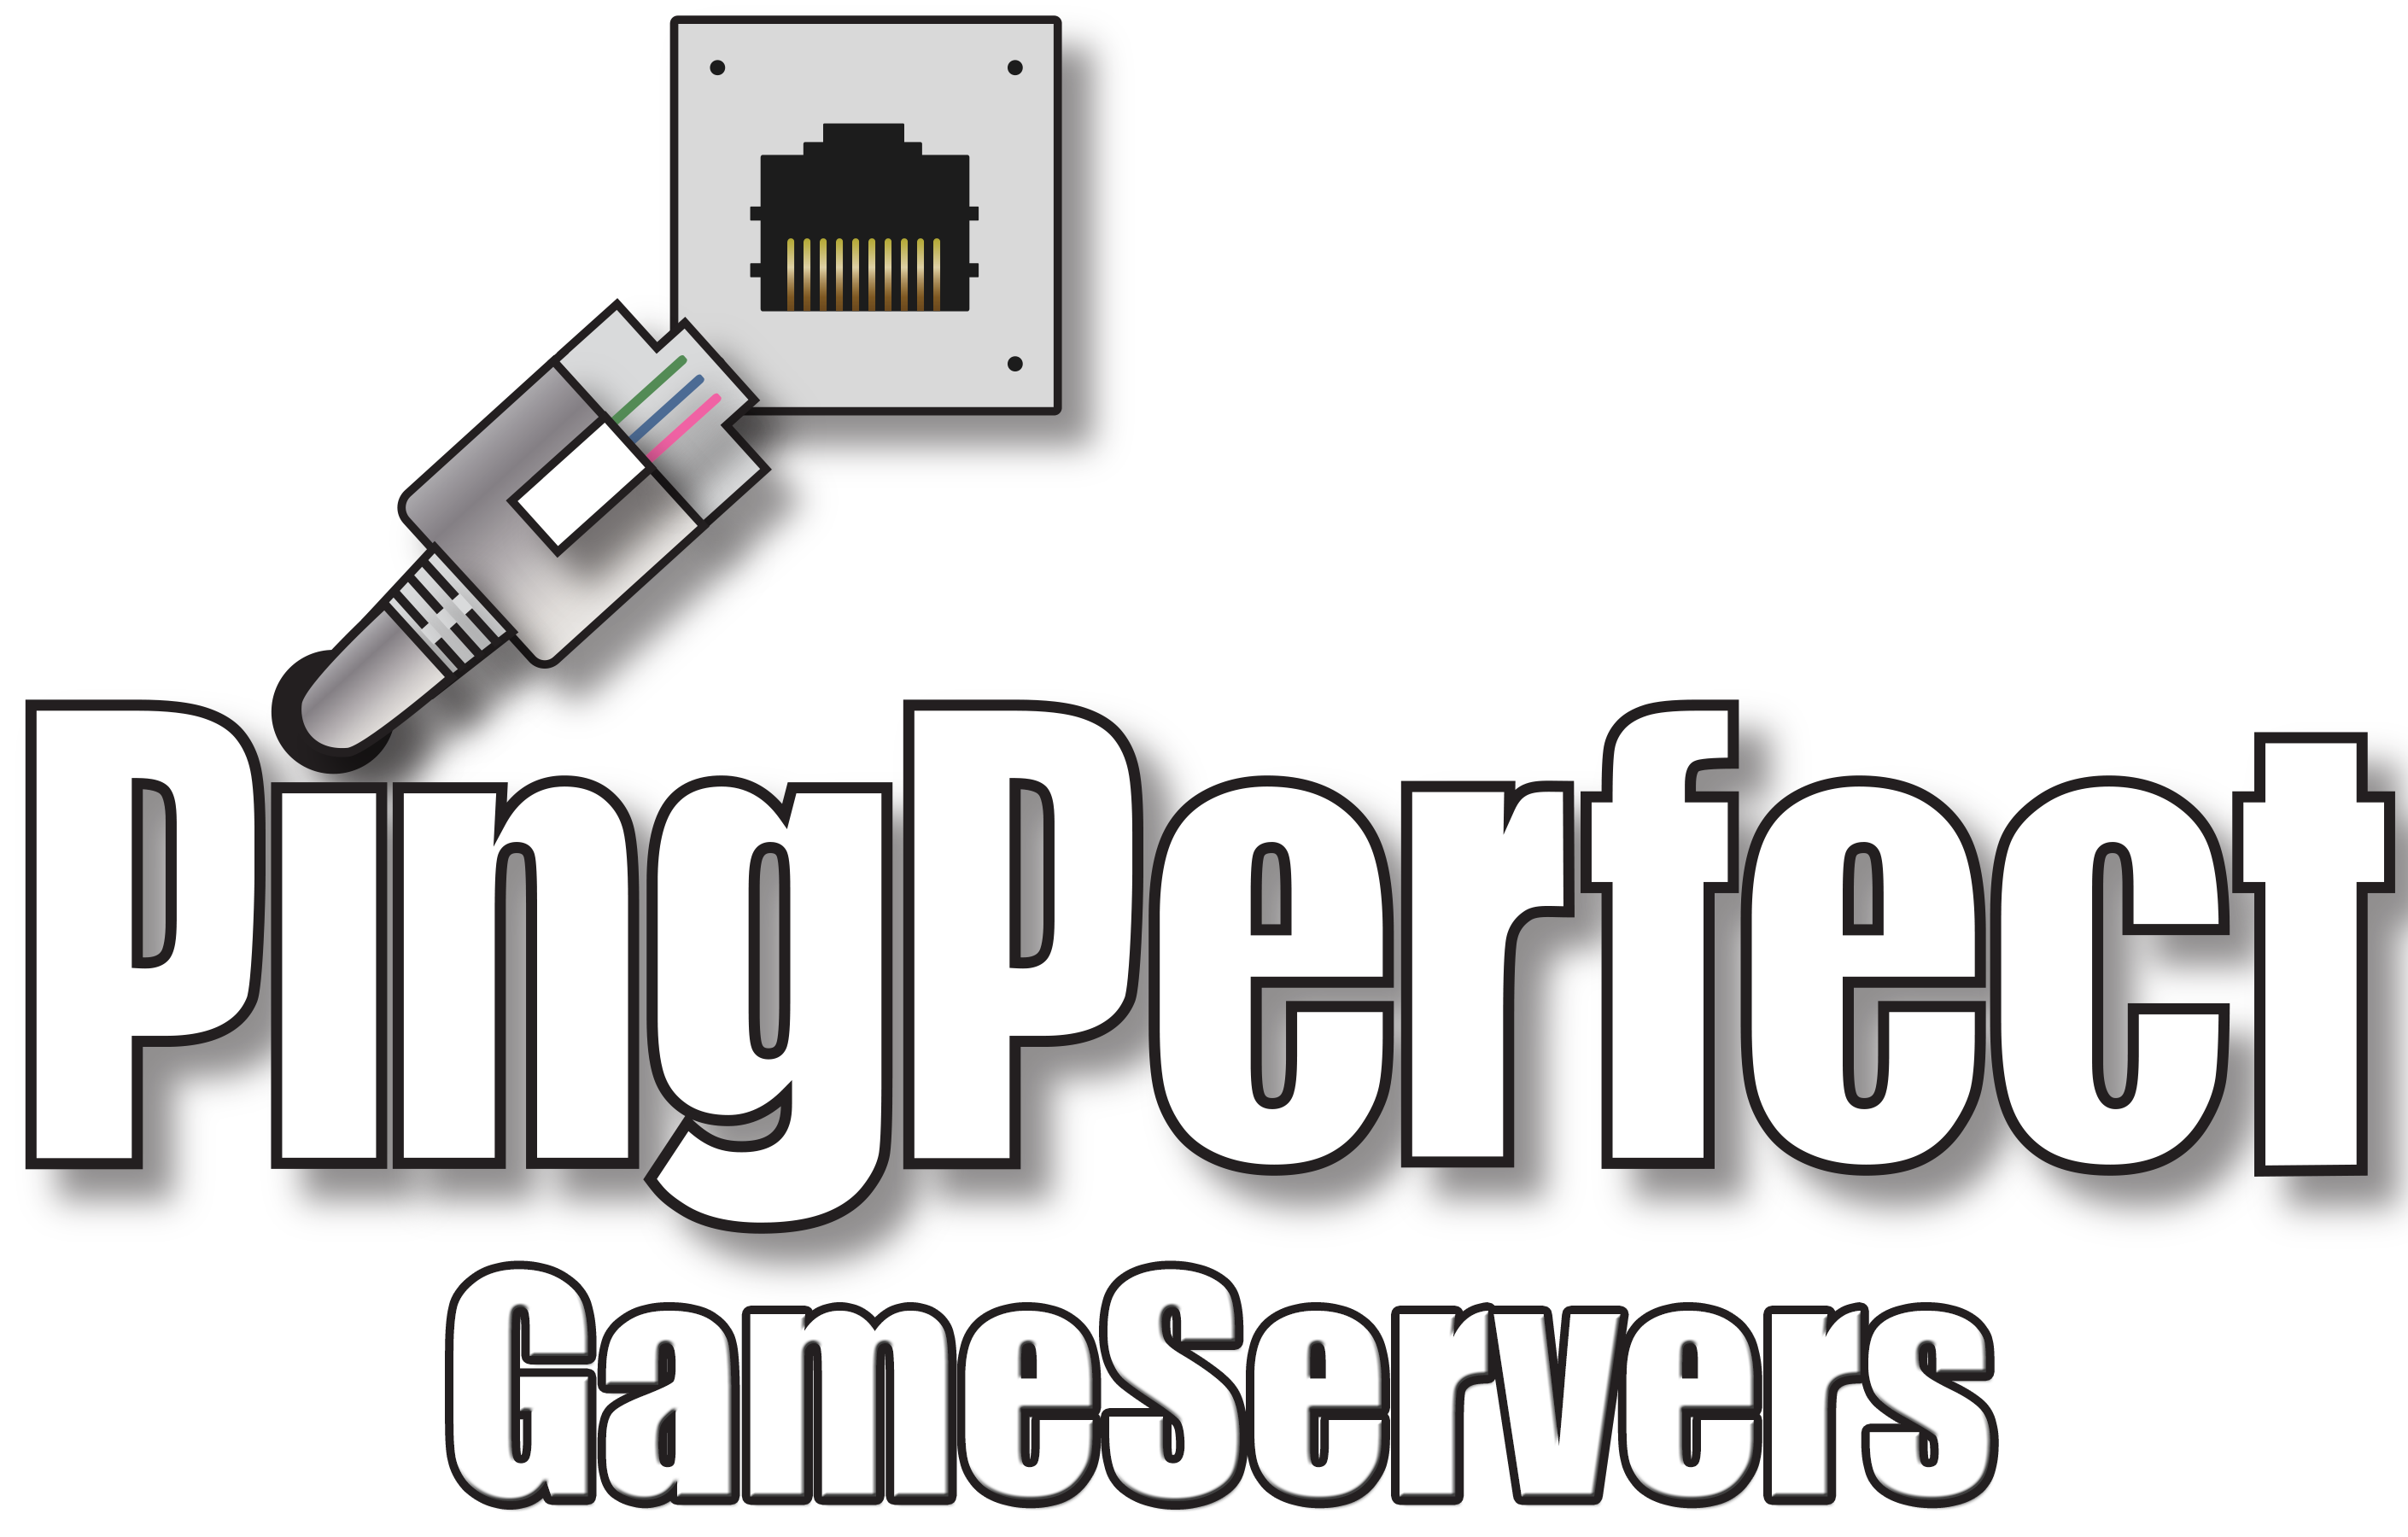 Ping Perfect logo